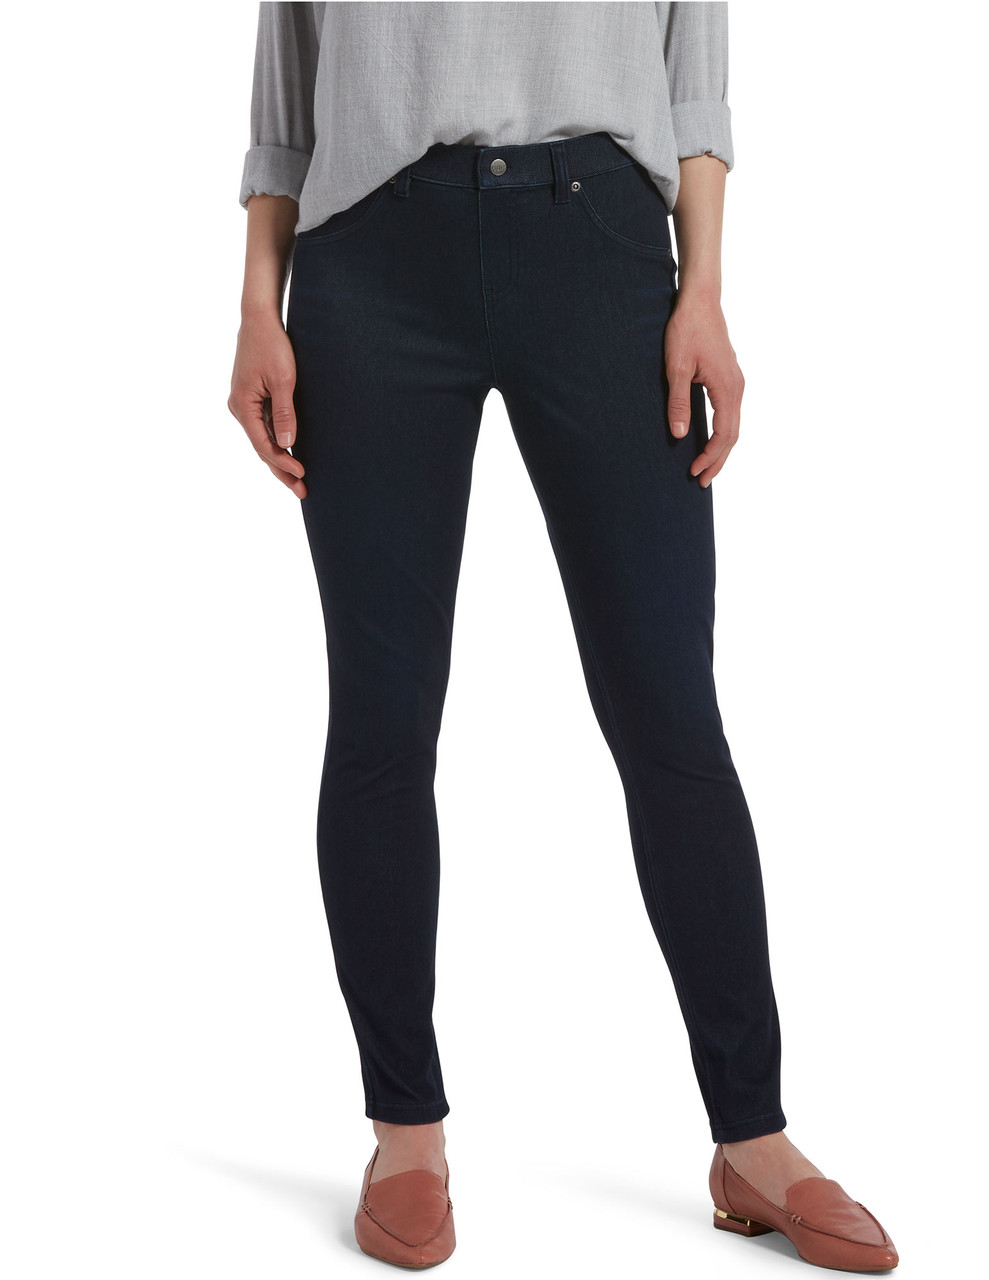 Express Jeans Womens Black High Rise Criss Cross Side Denim Casual Legging 6